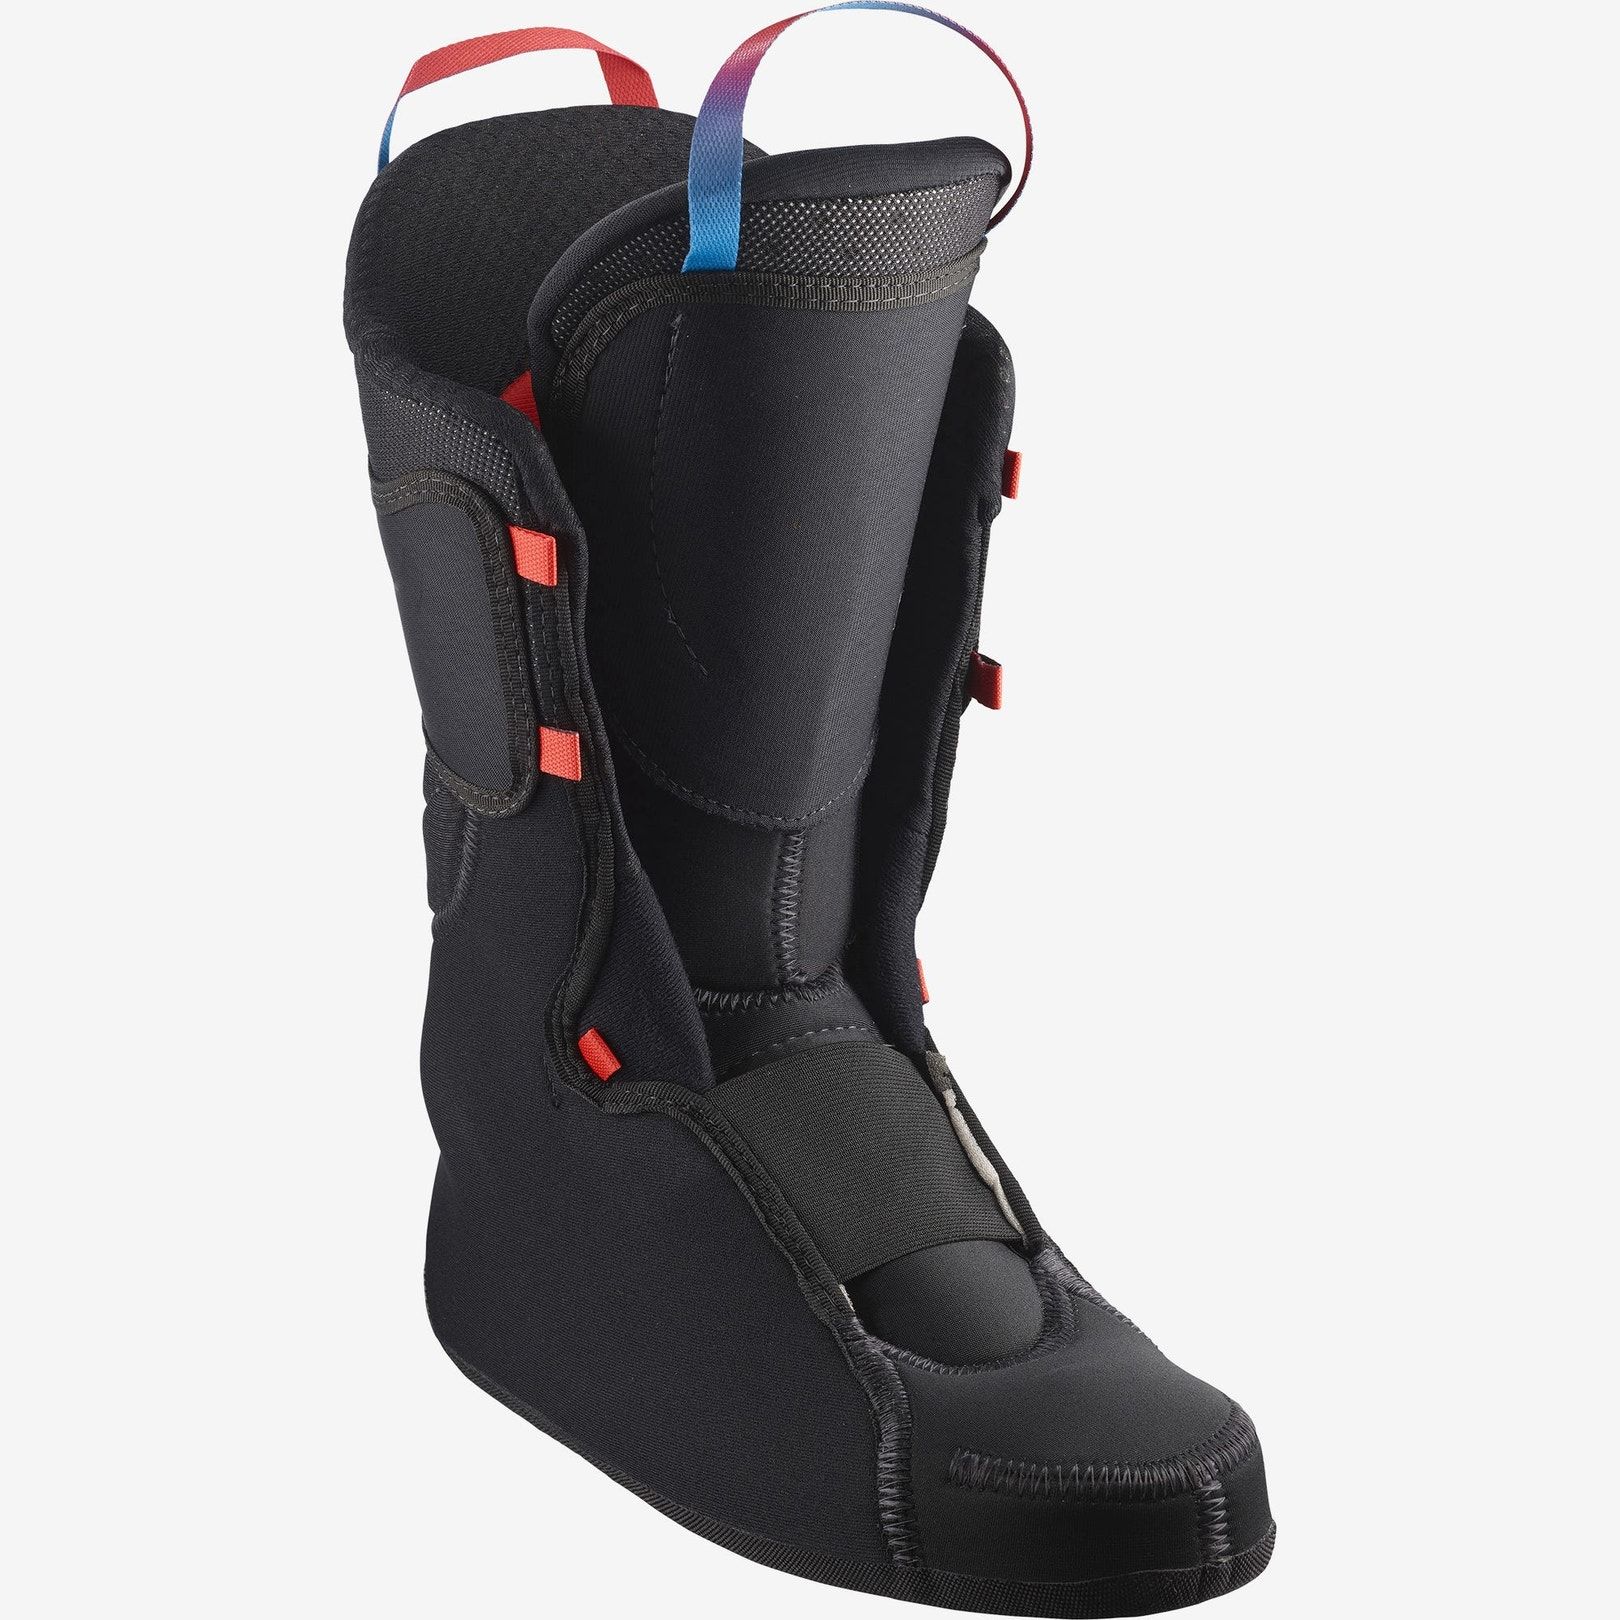 Chaussures de ski S/LAB MTN BLACK/Rainy Day/R